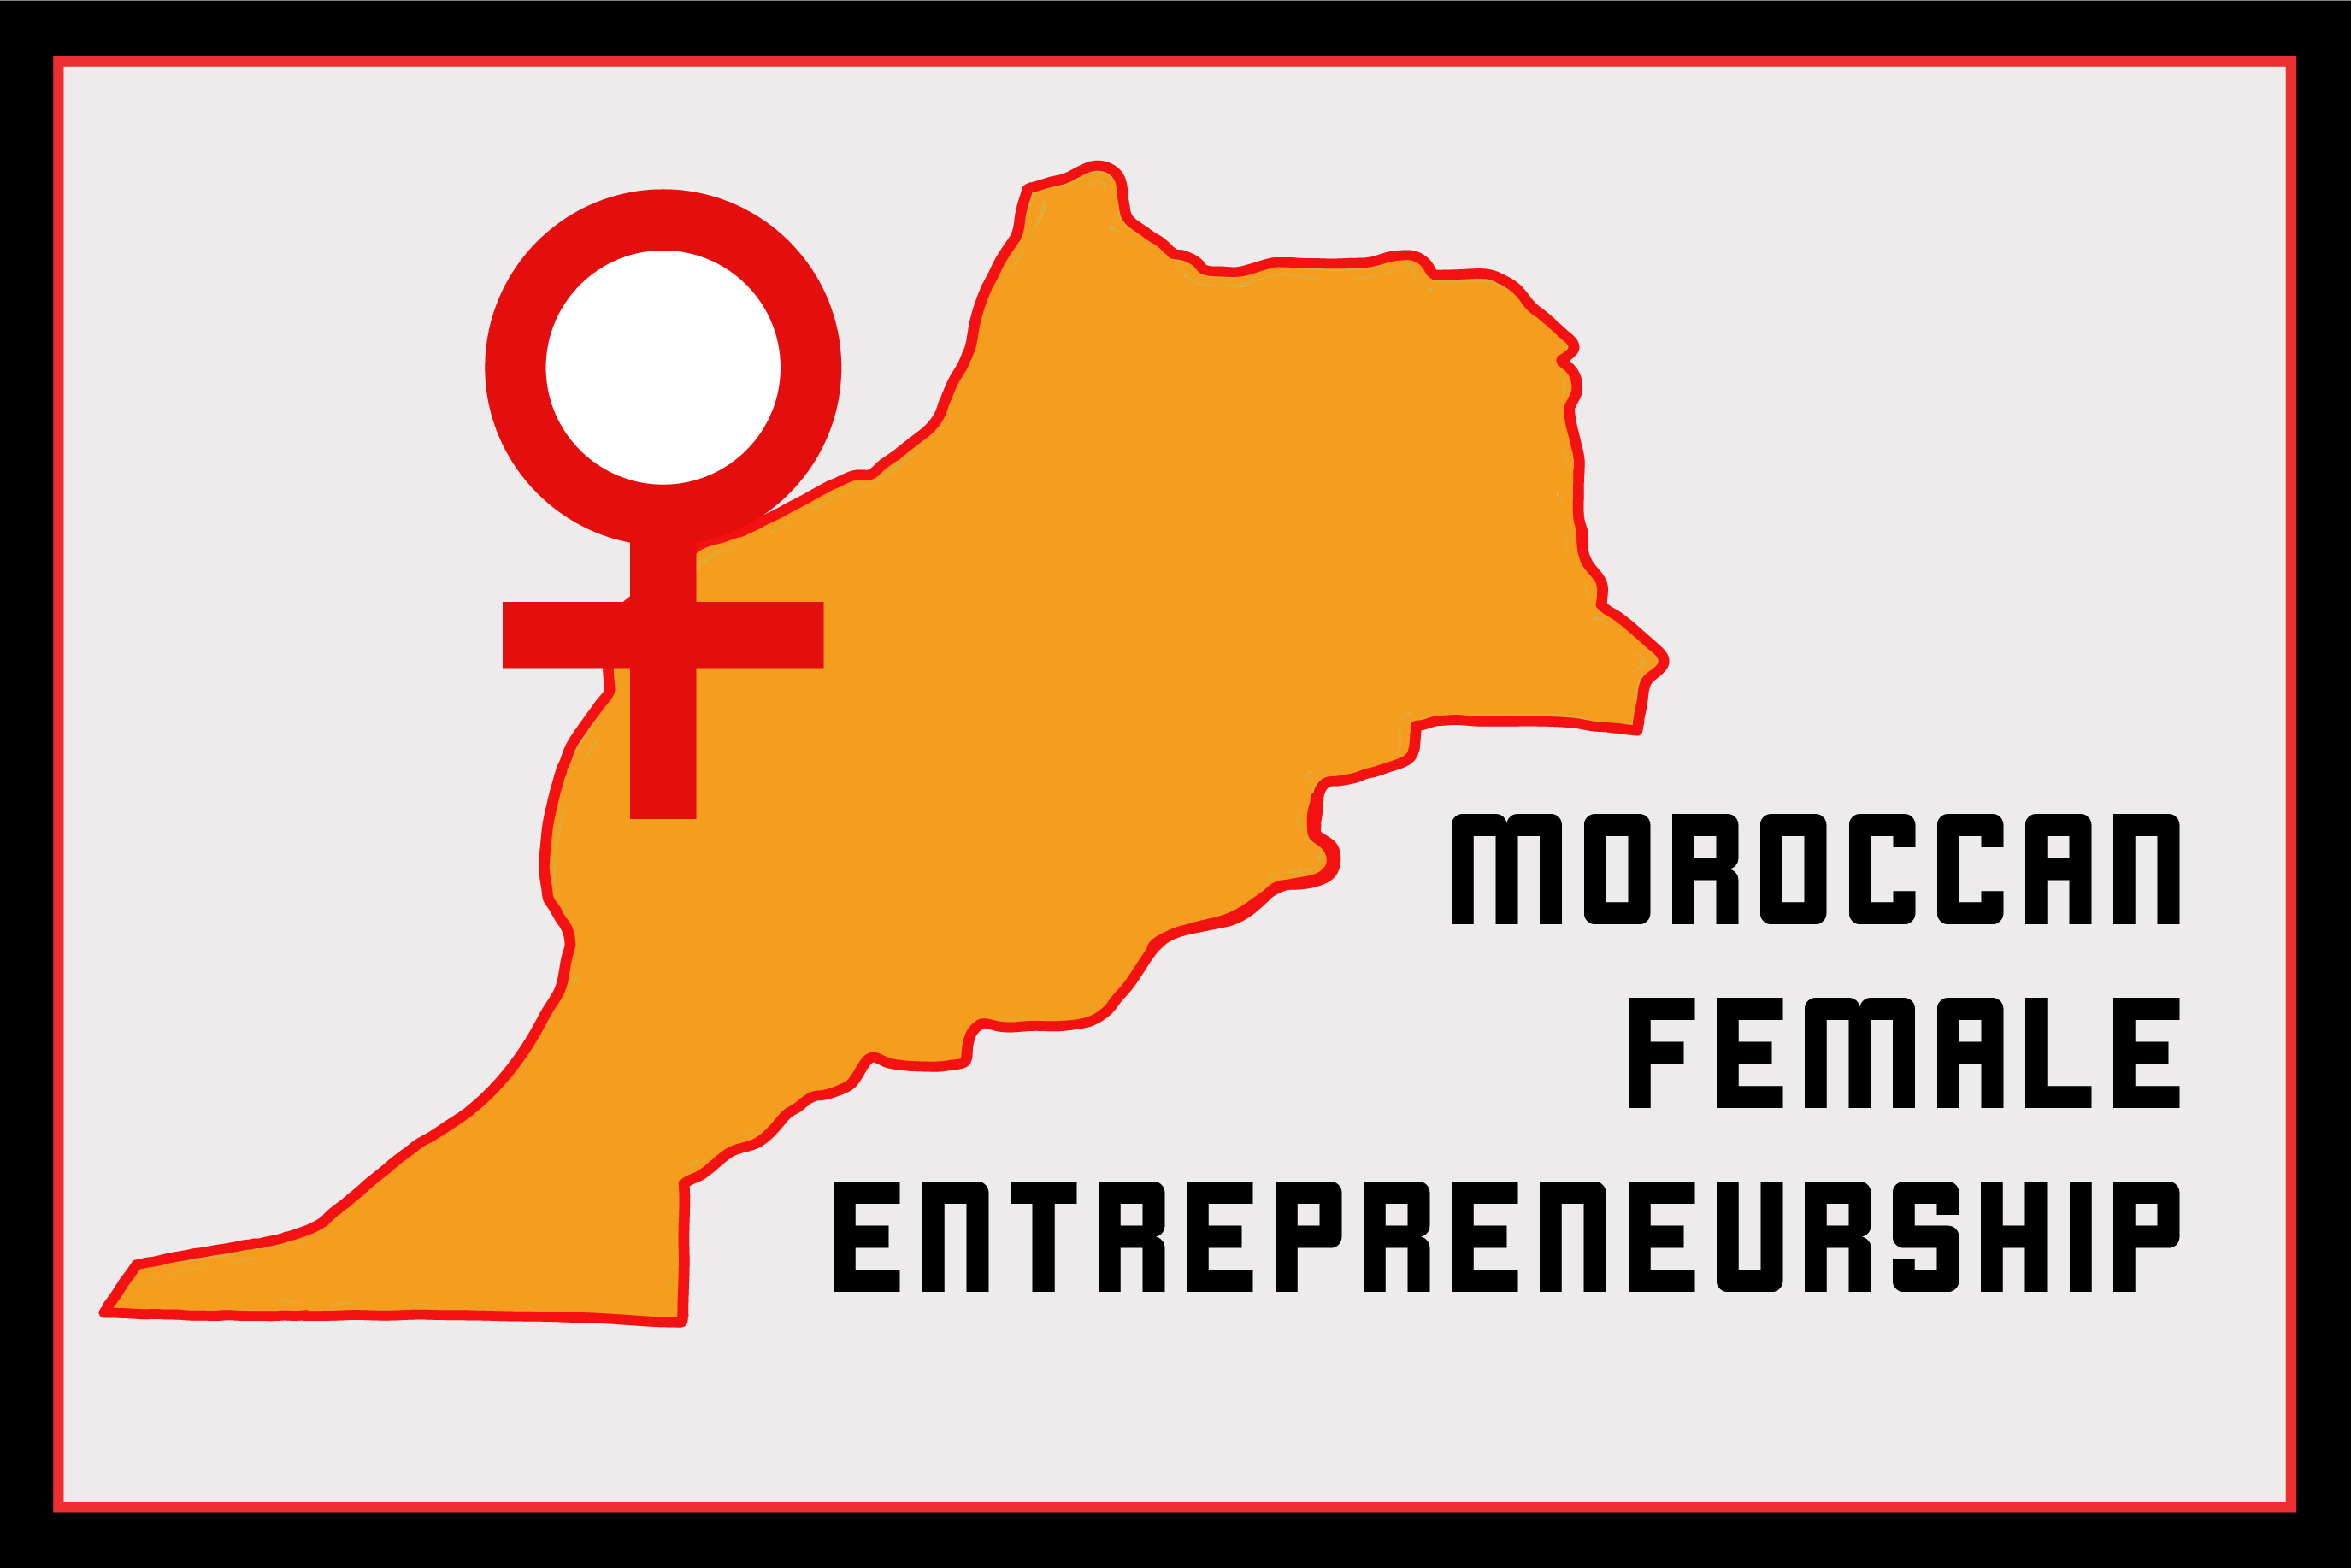 Moroccan Female Entrepreneurship